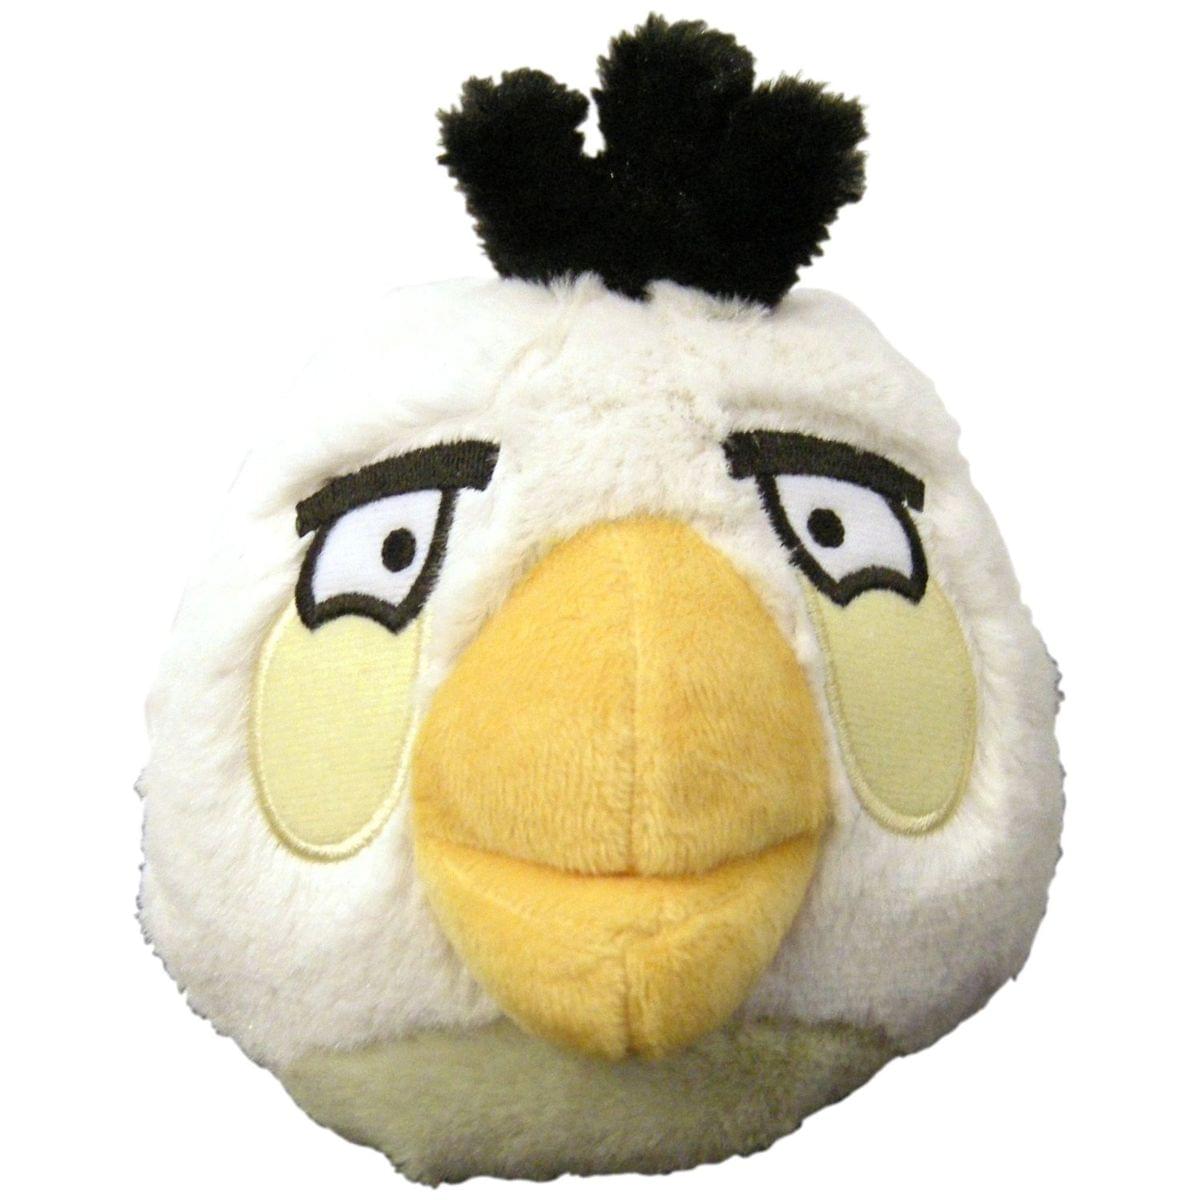 Angry Birds 8" Plush With Sound: White Bird